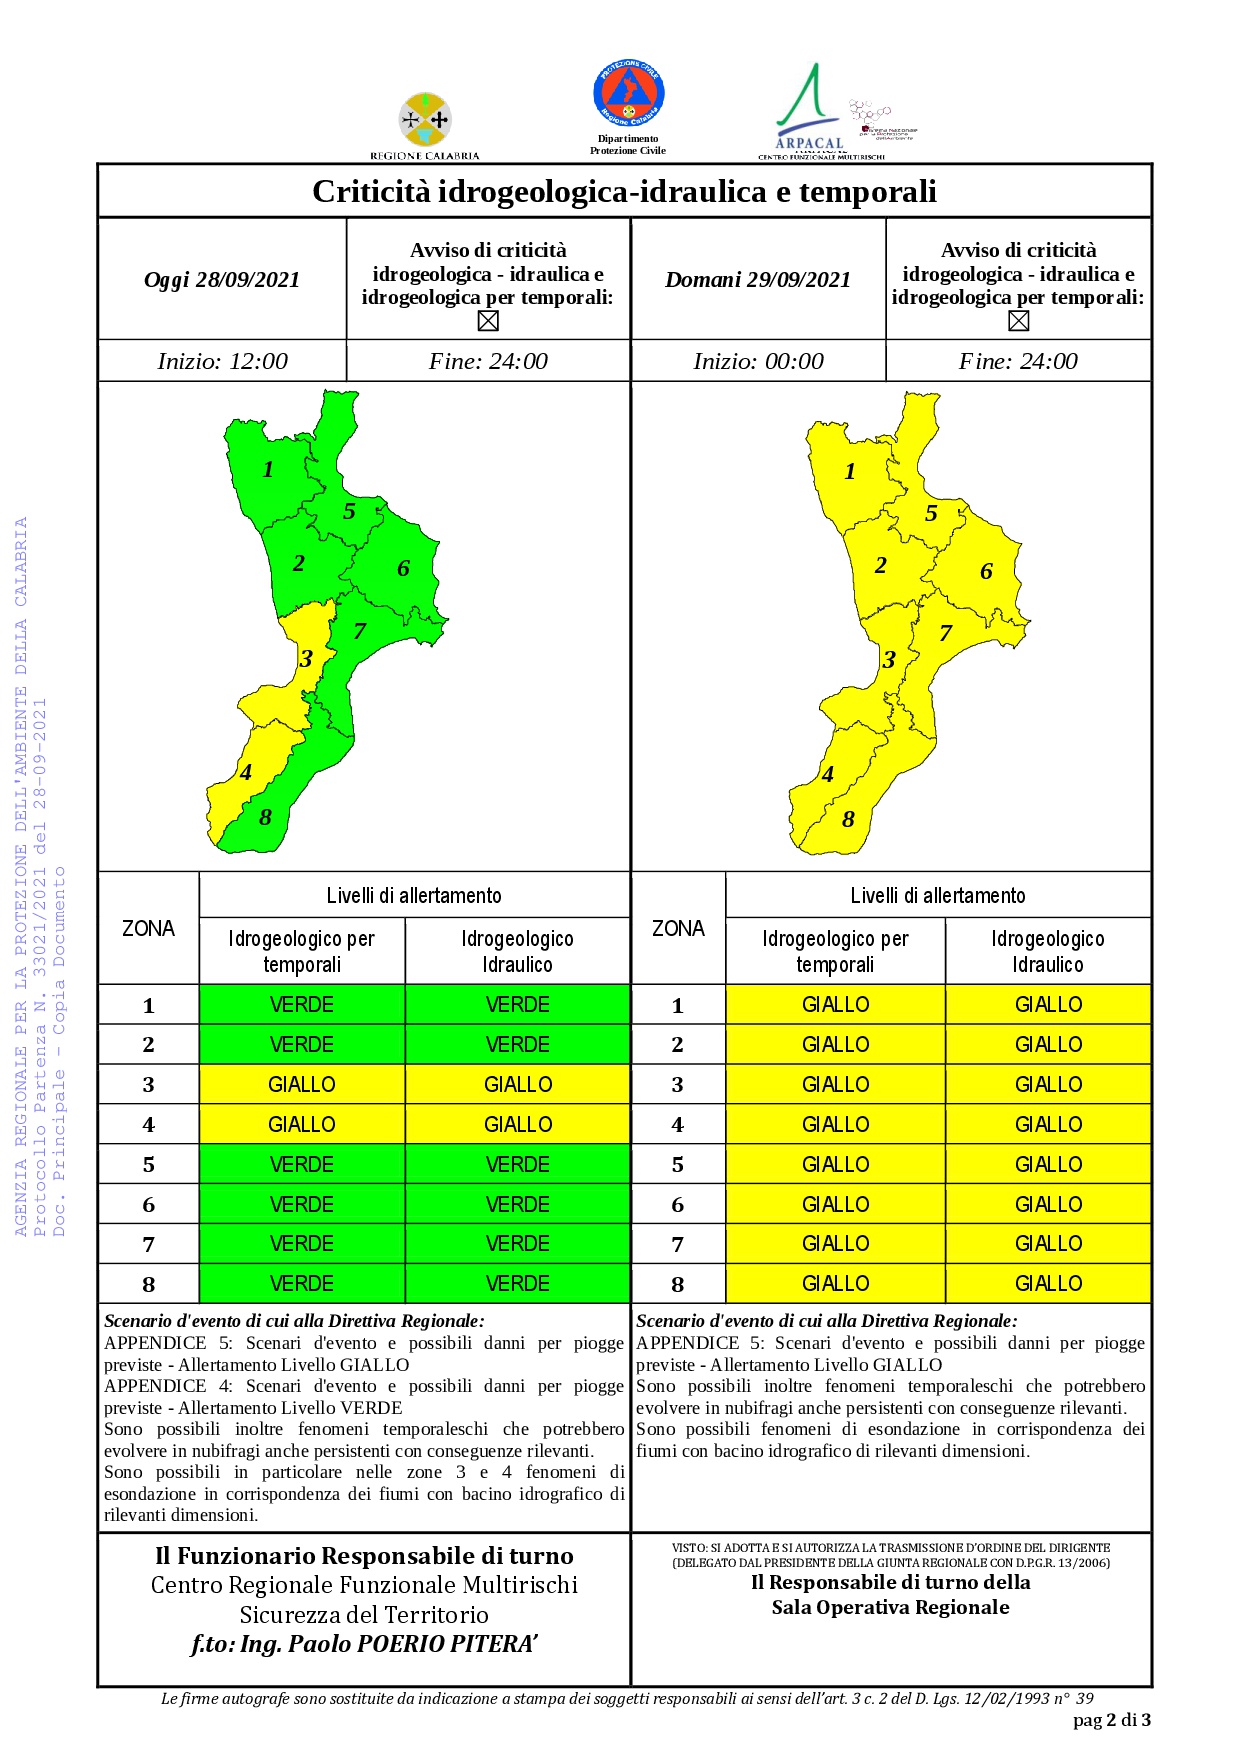 Criticità idrogeologica-idraulica e temporali in Calabria 28-09-2021